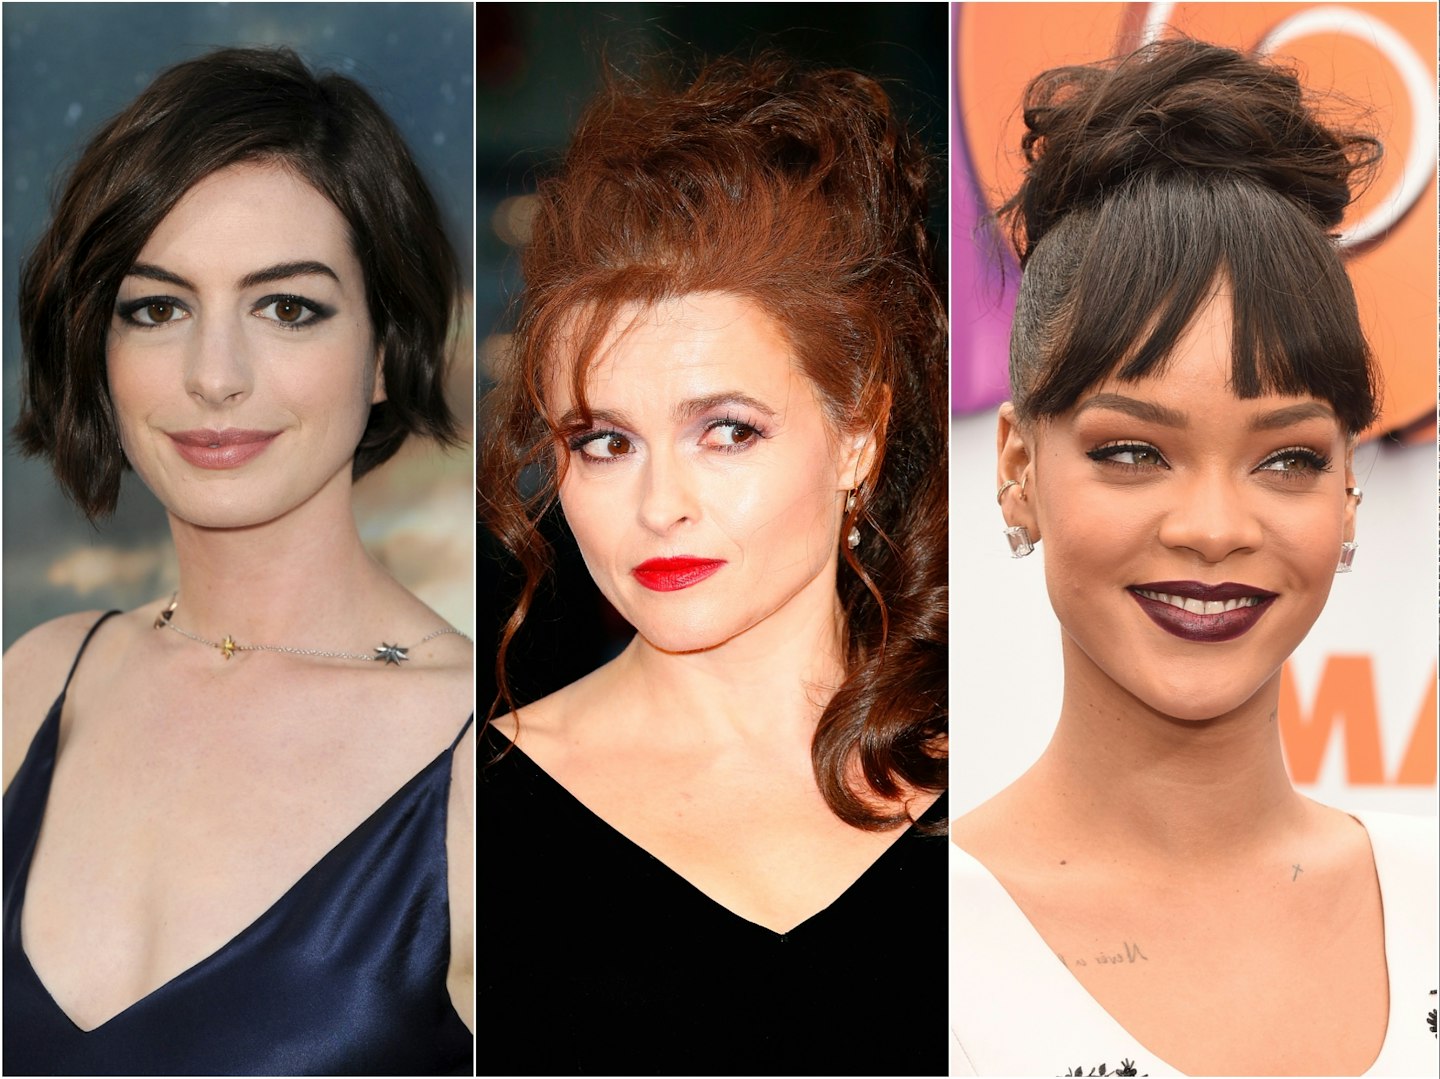 Anne Hathaway, Helena Bonham Carter and Rihanna